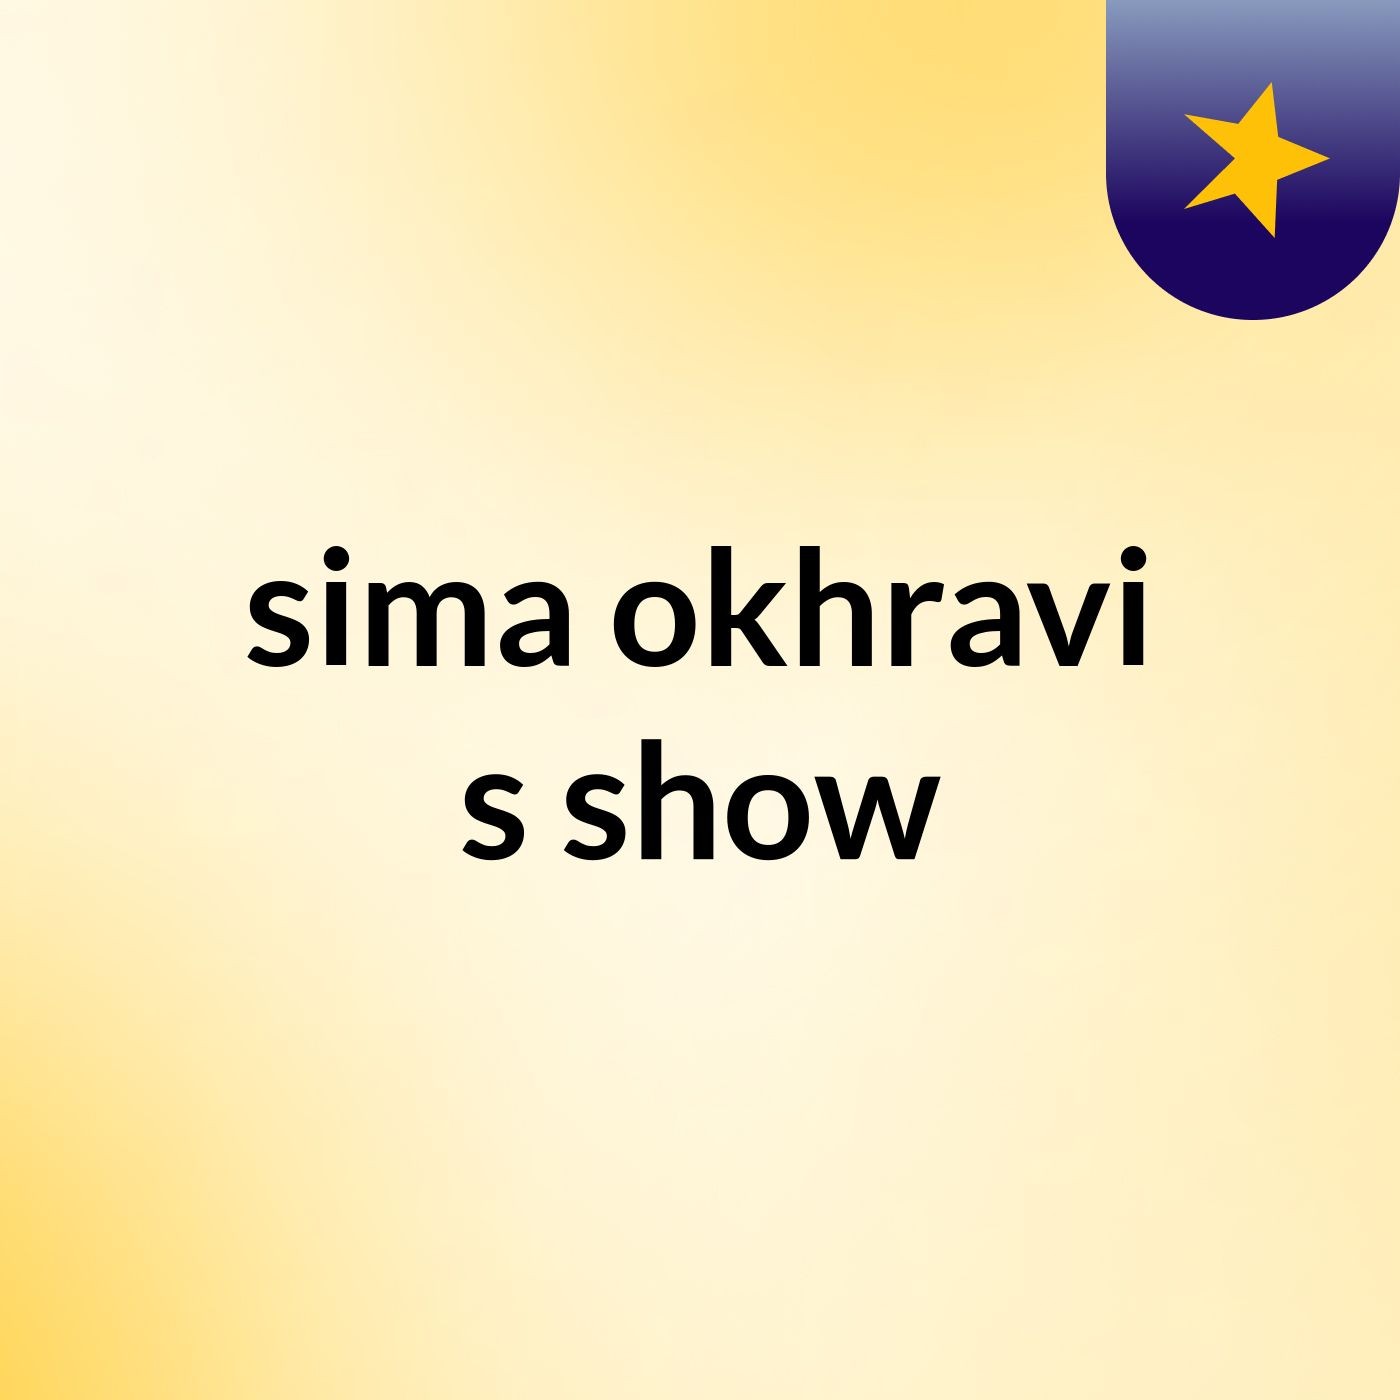 Episode 2 - sima okhravi's show